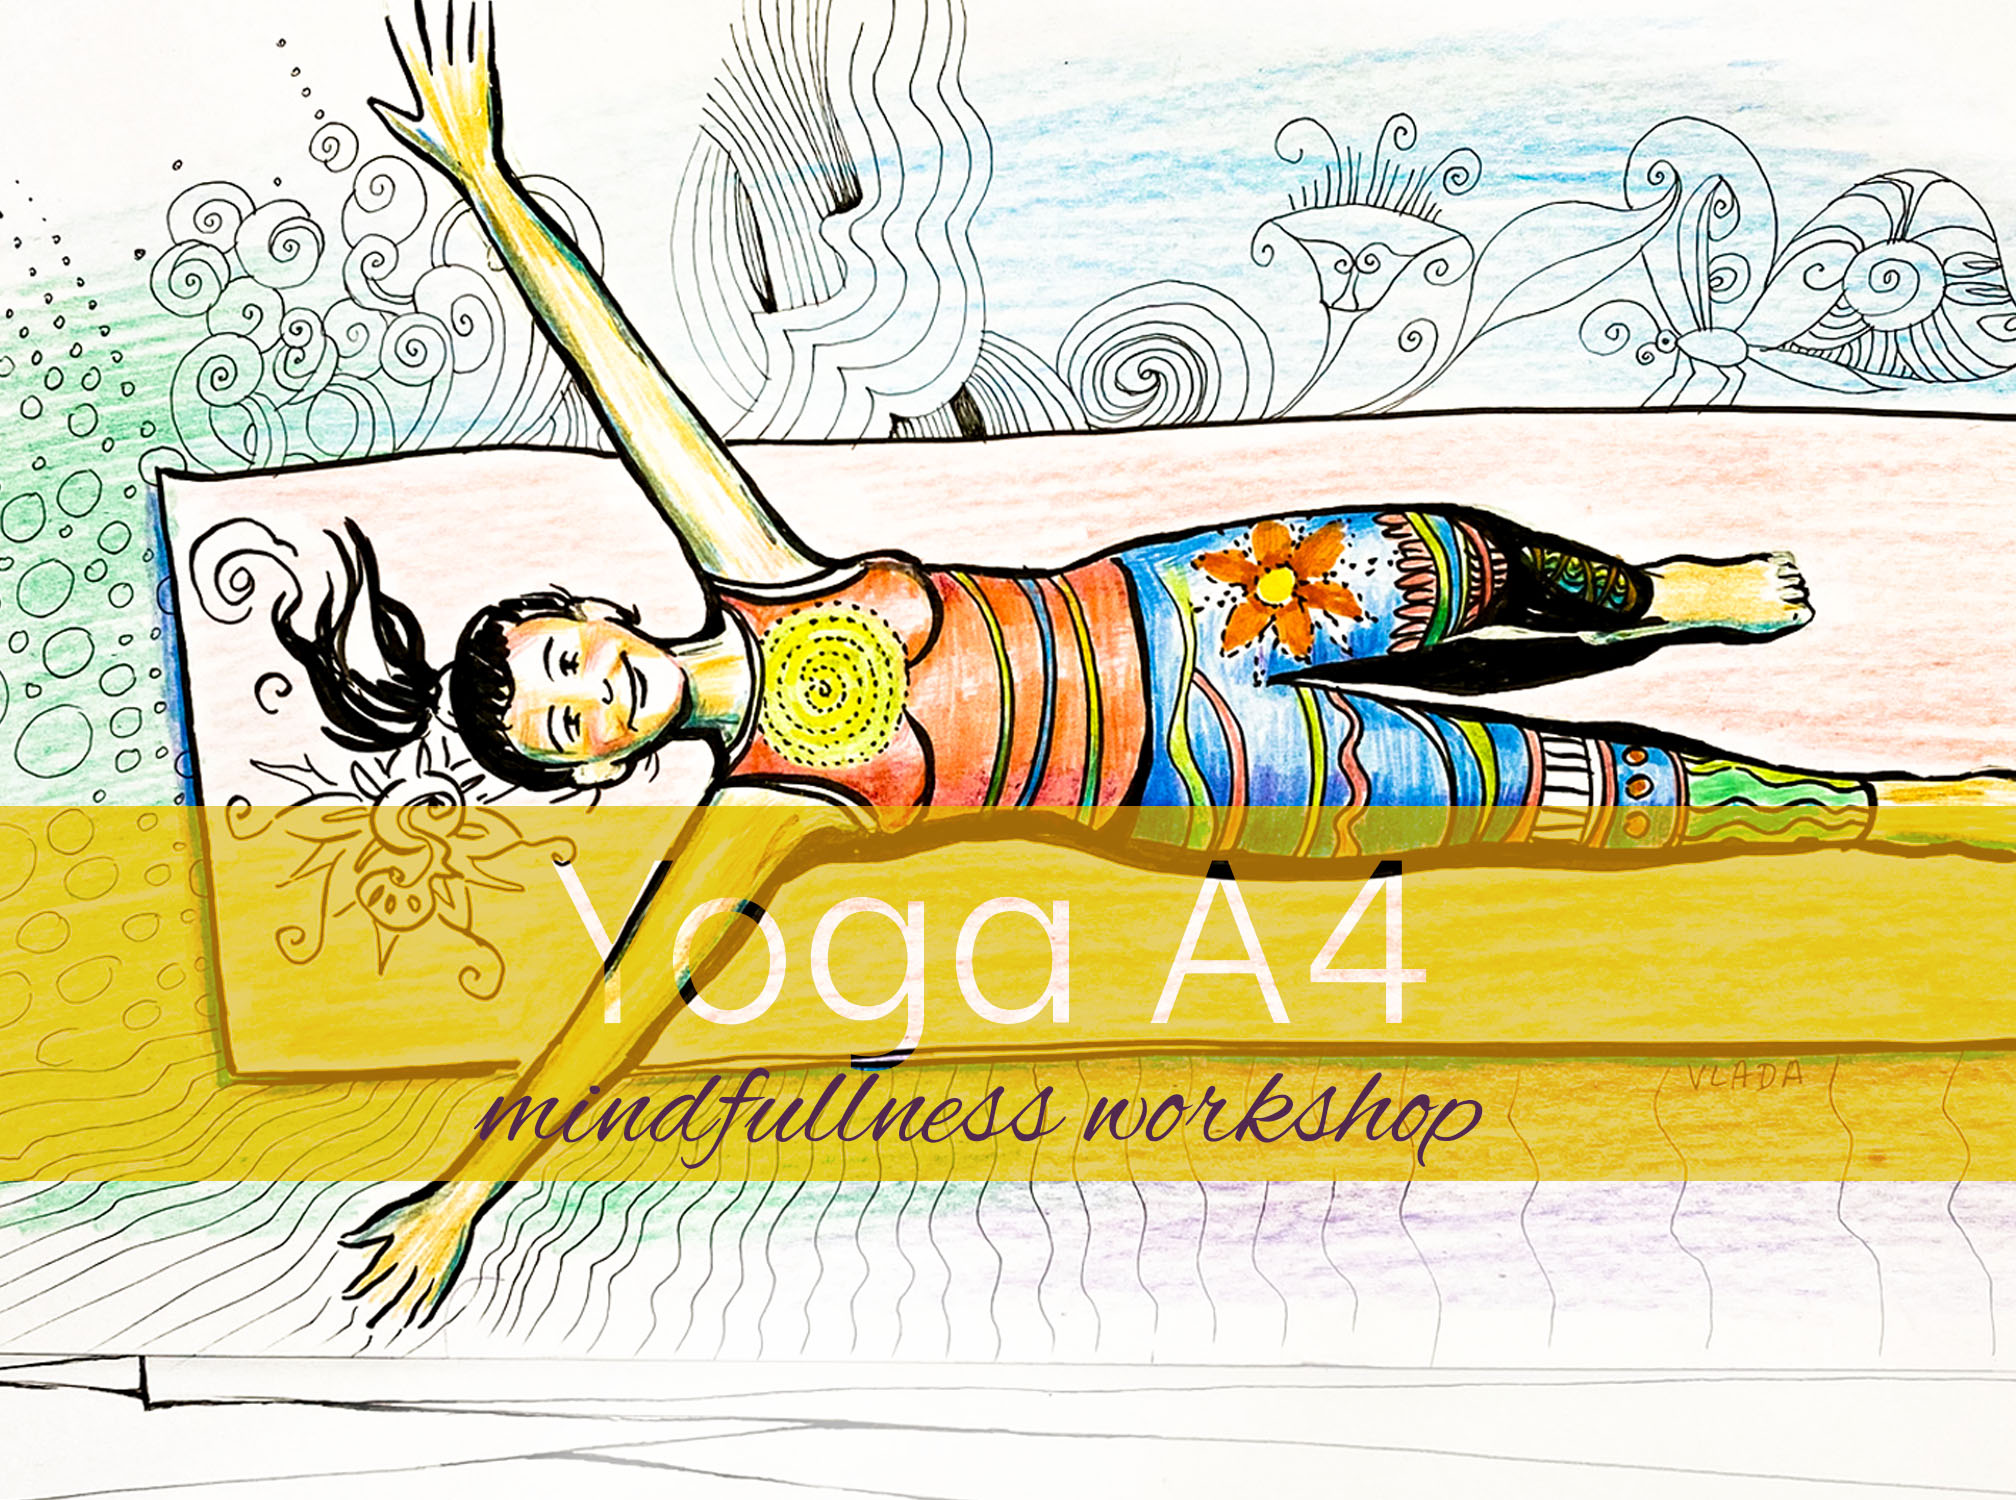 yoga a4 mindfulness workshop